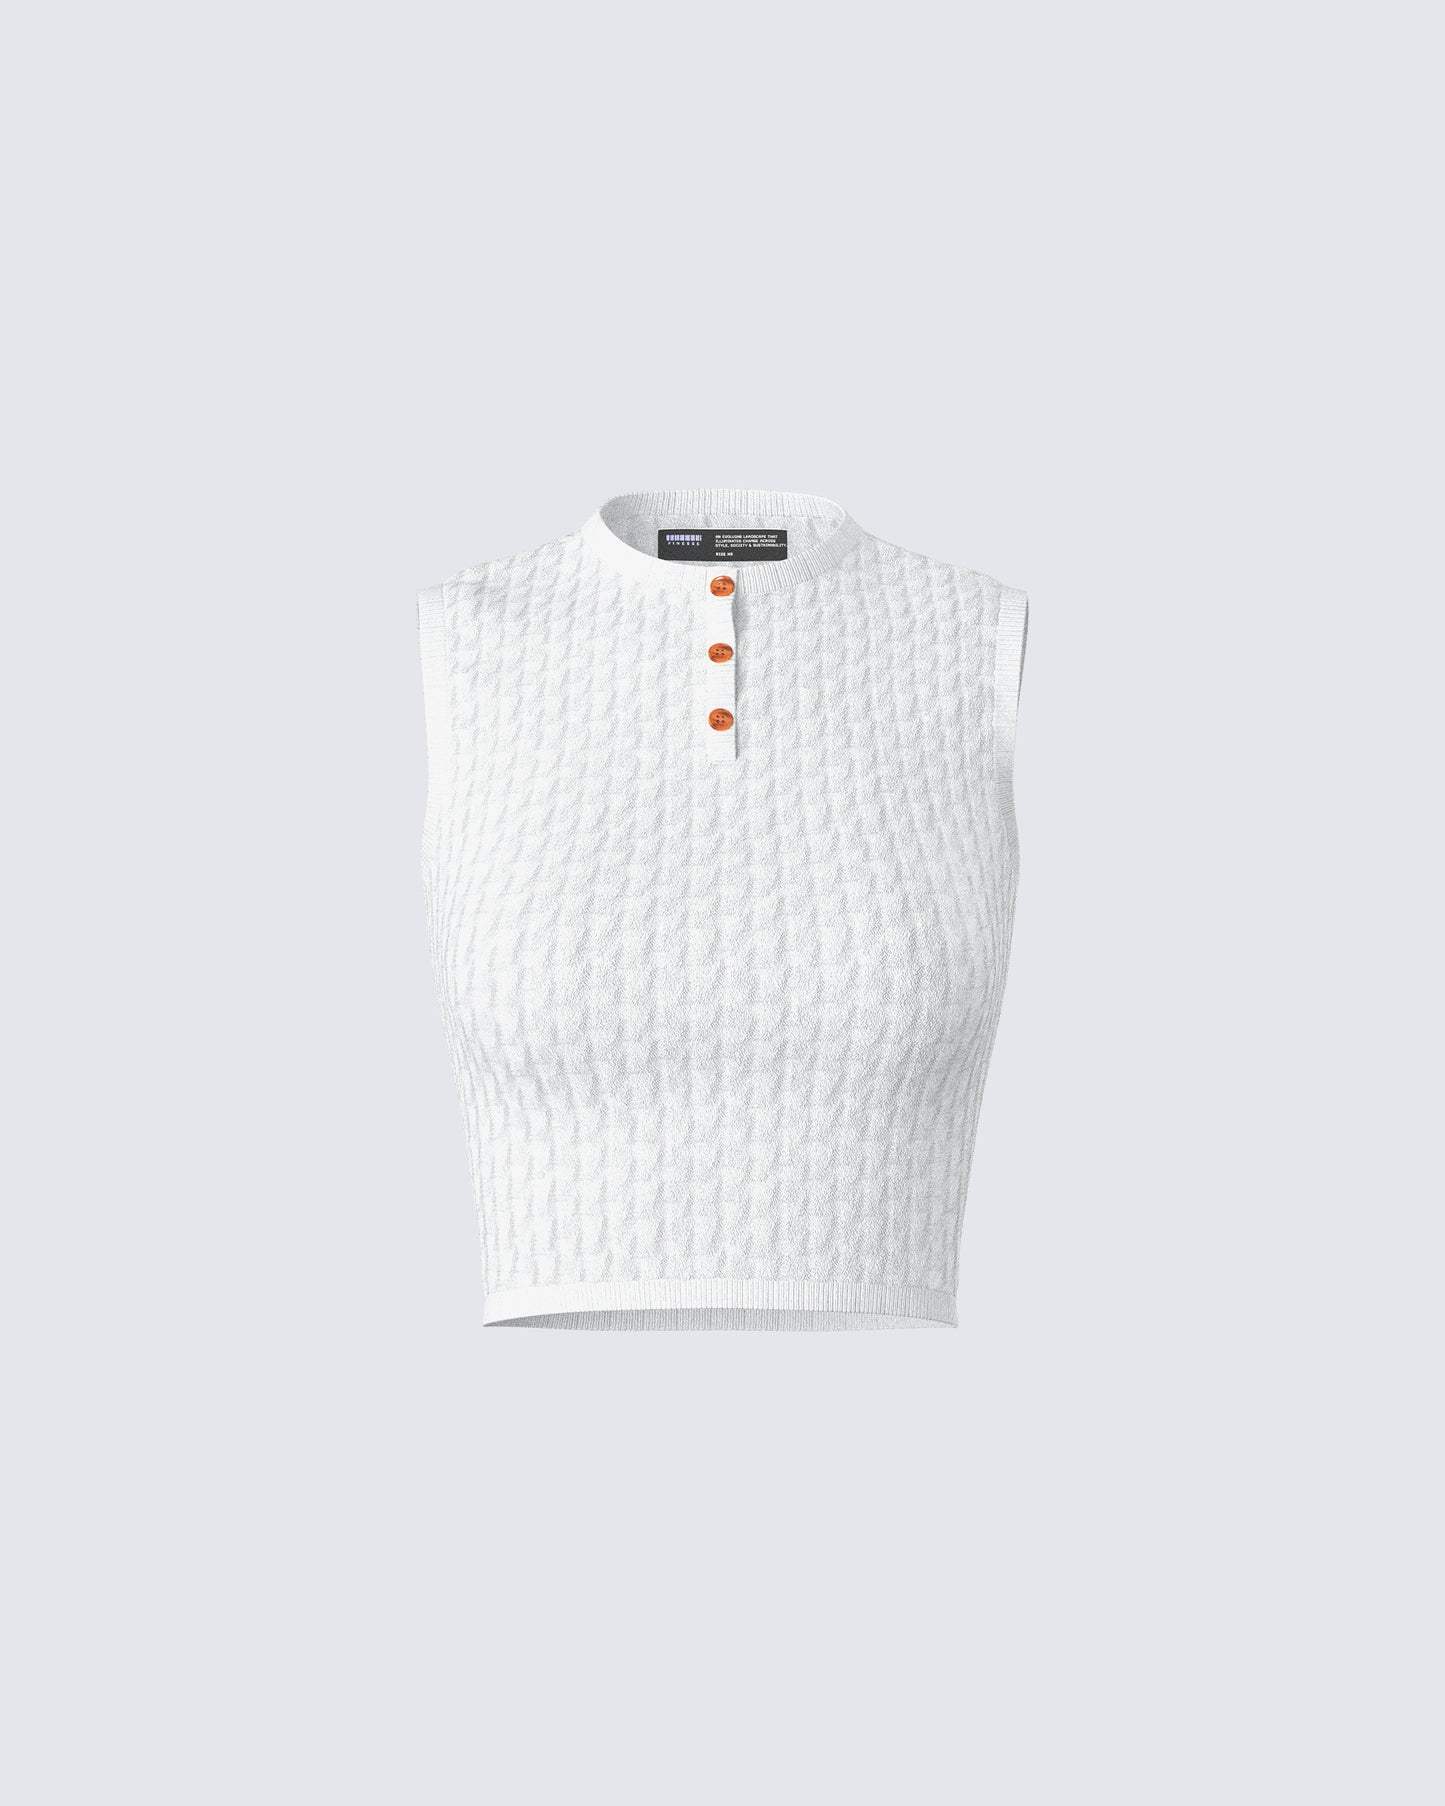 Heidi Ivory Sweater Pattern Top